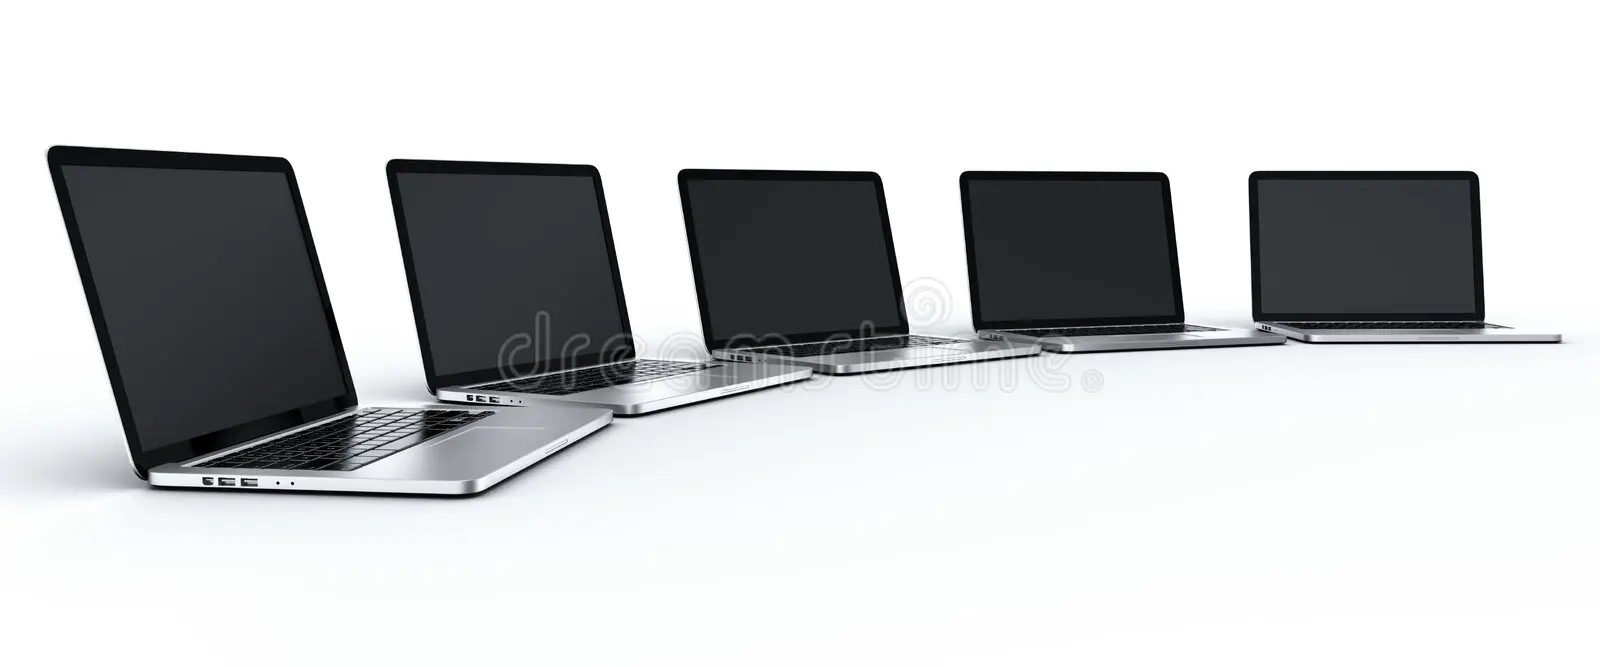 Several laptops